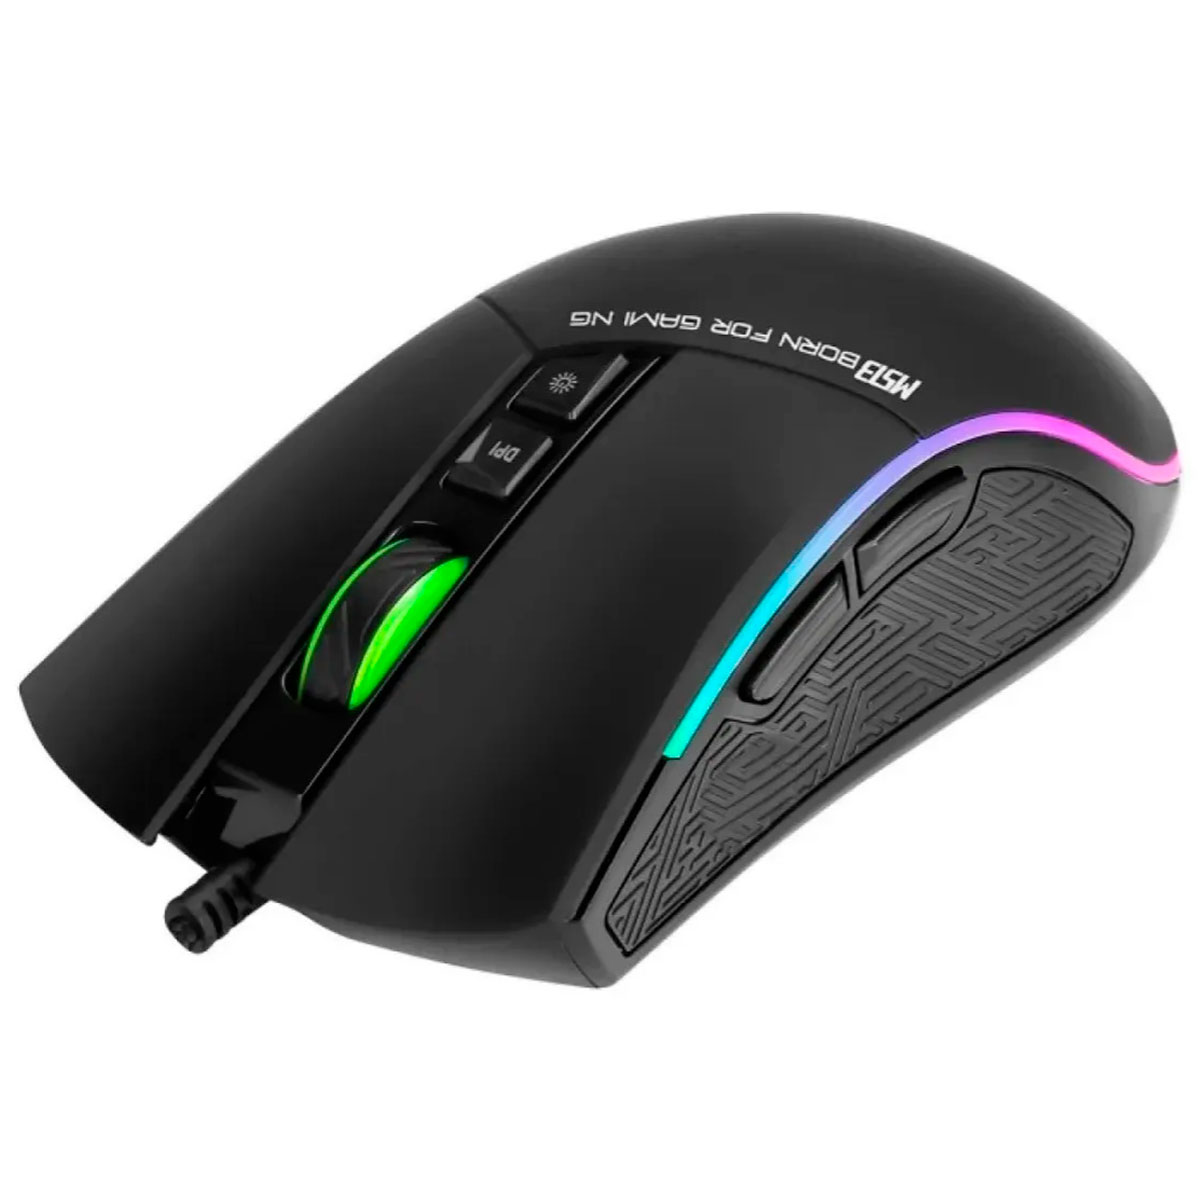 Mouse Gamer Marvo Scorpion M513 - 4800dpi - 7 Botões Programáveis - RGB